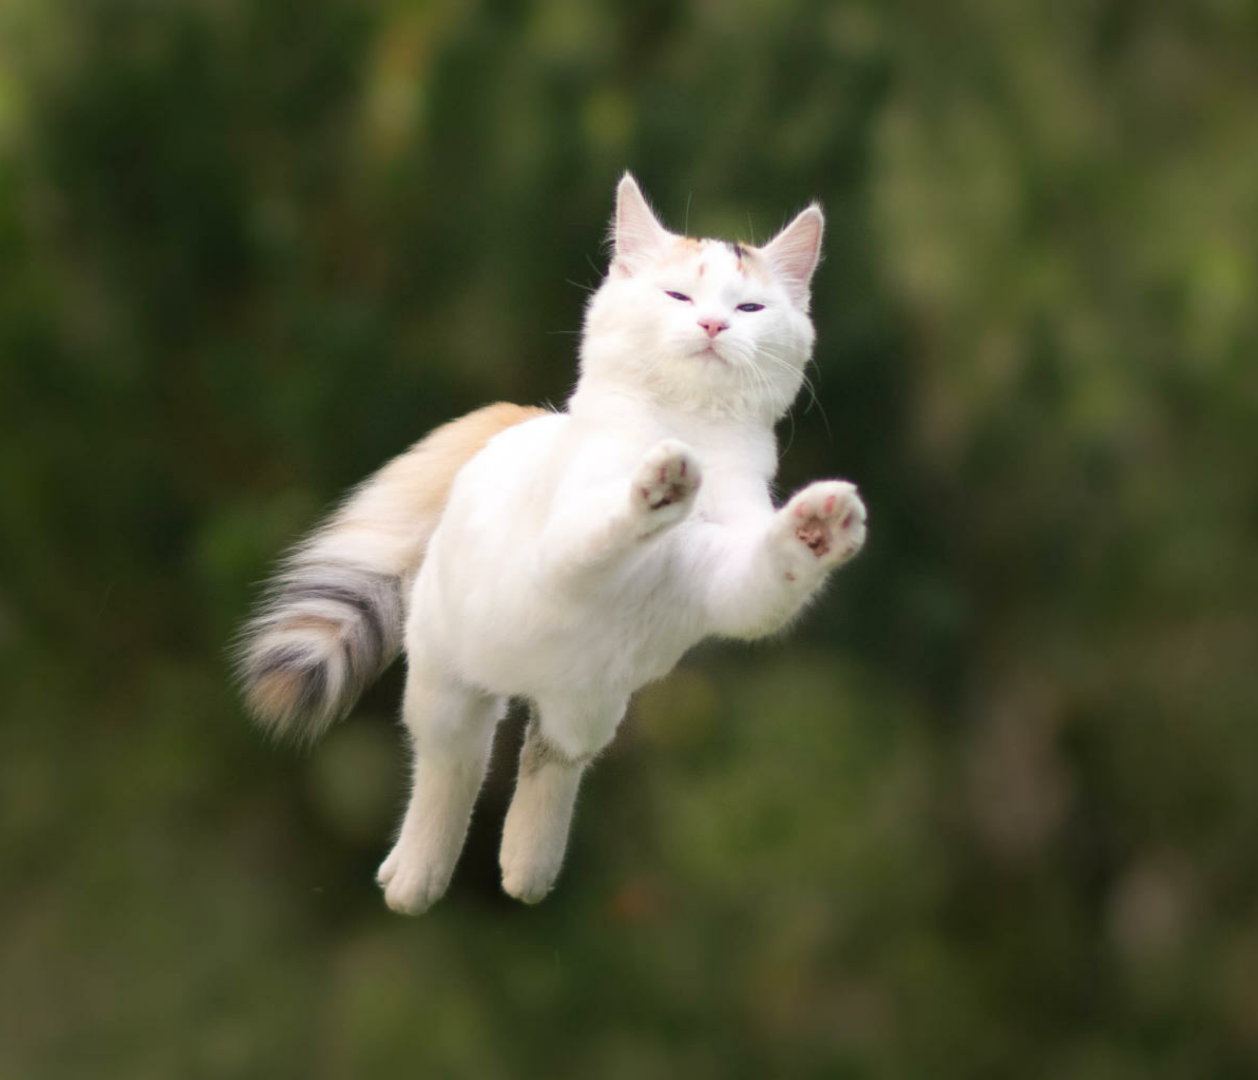 Serenity - Animals, Flight, Bounce, Levitation, cat